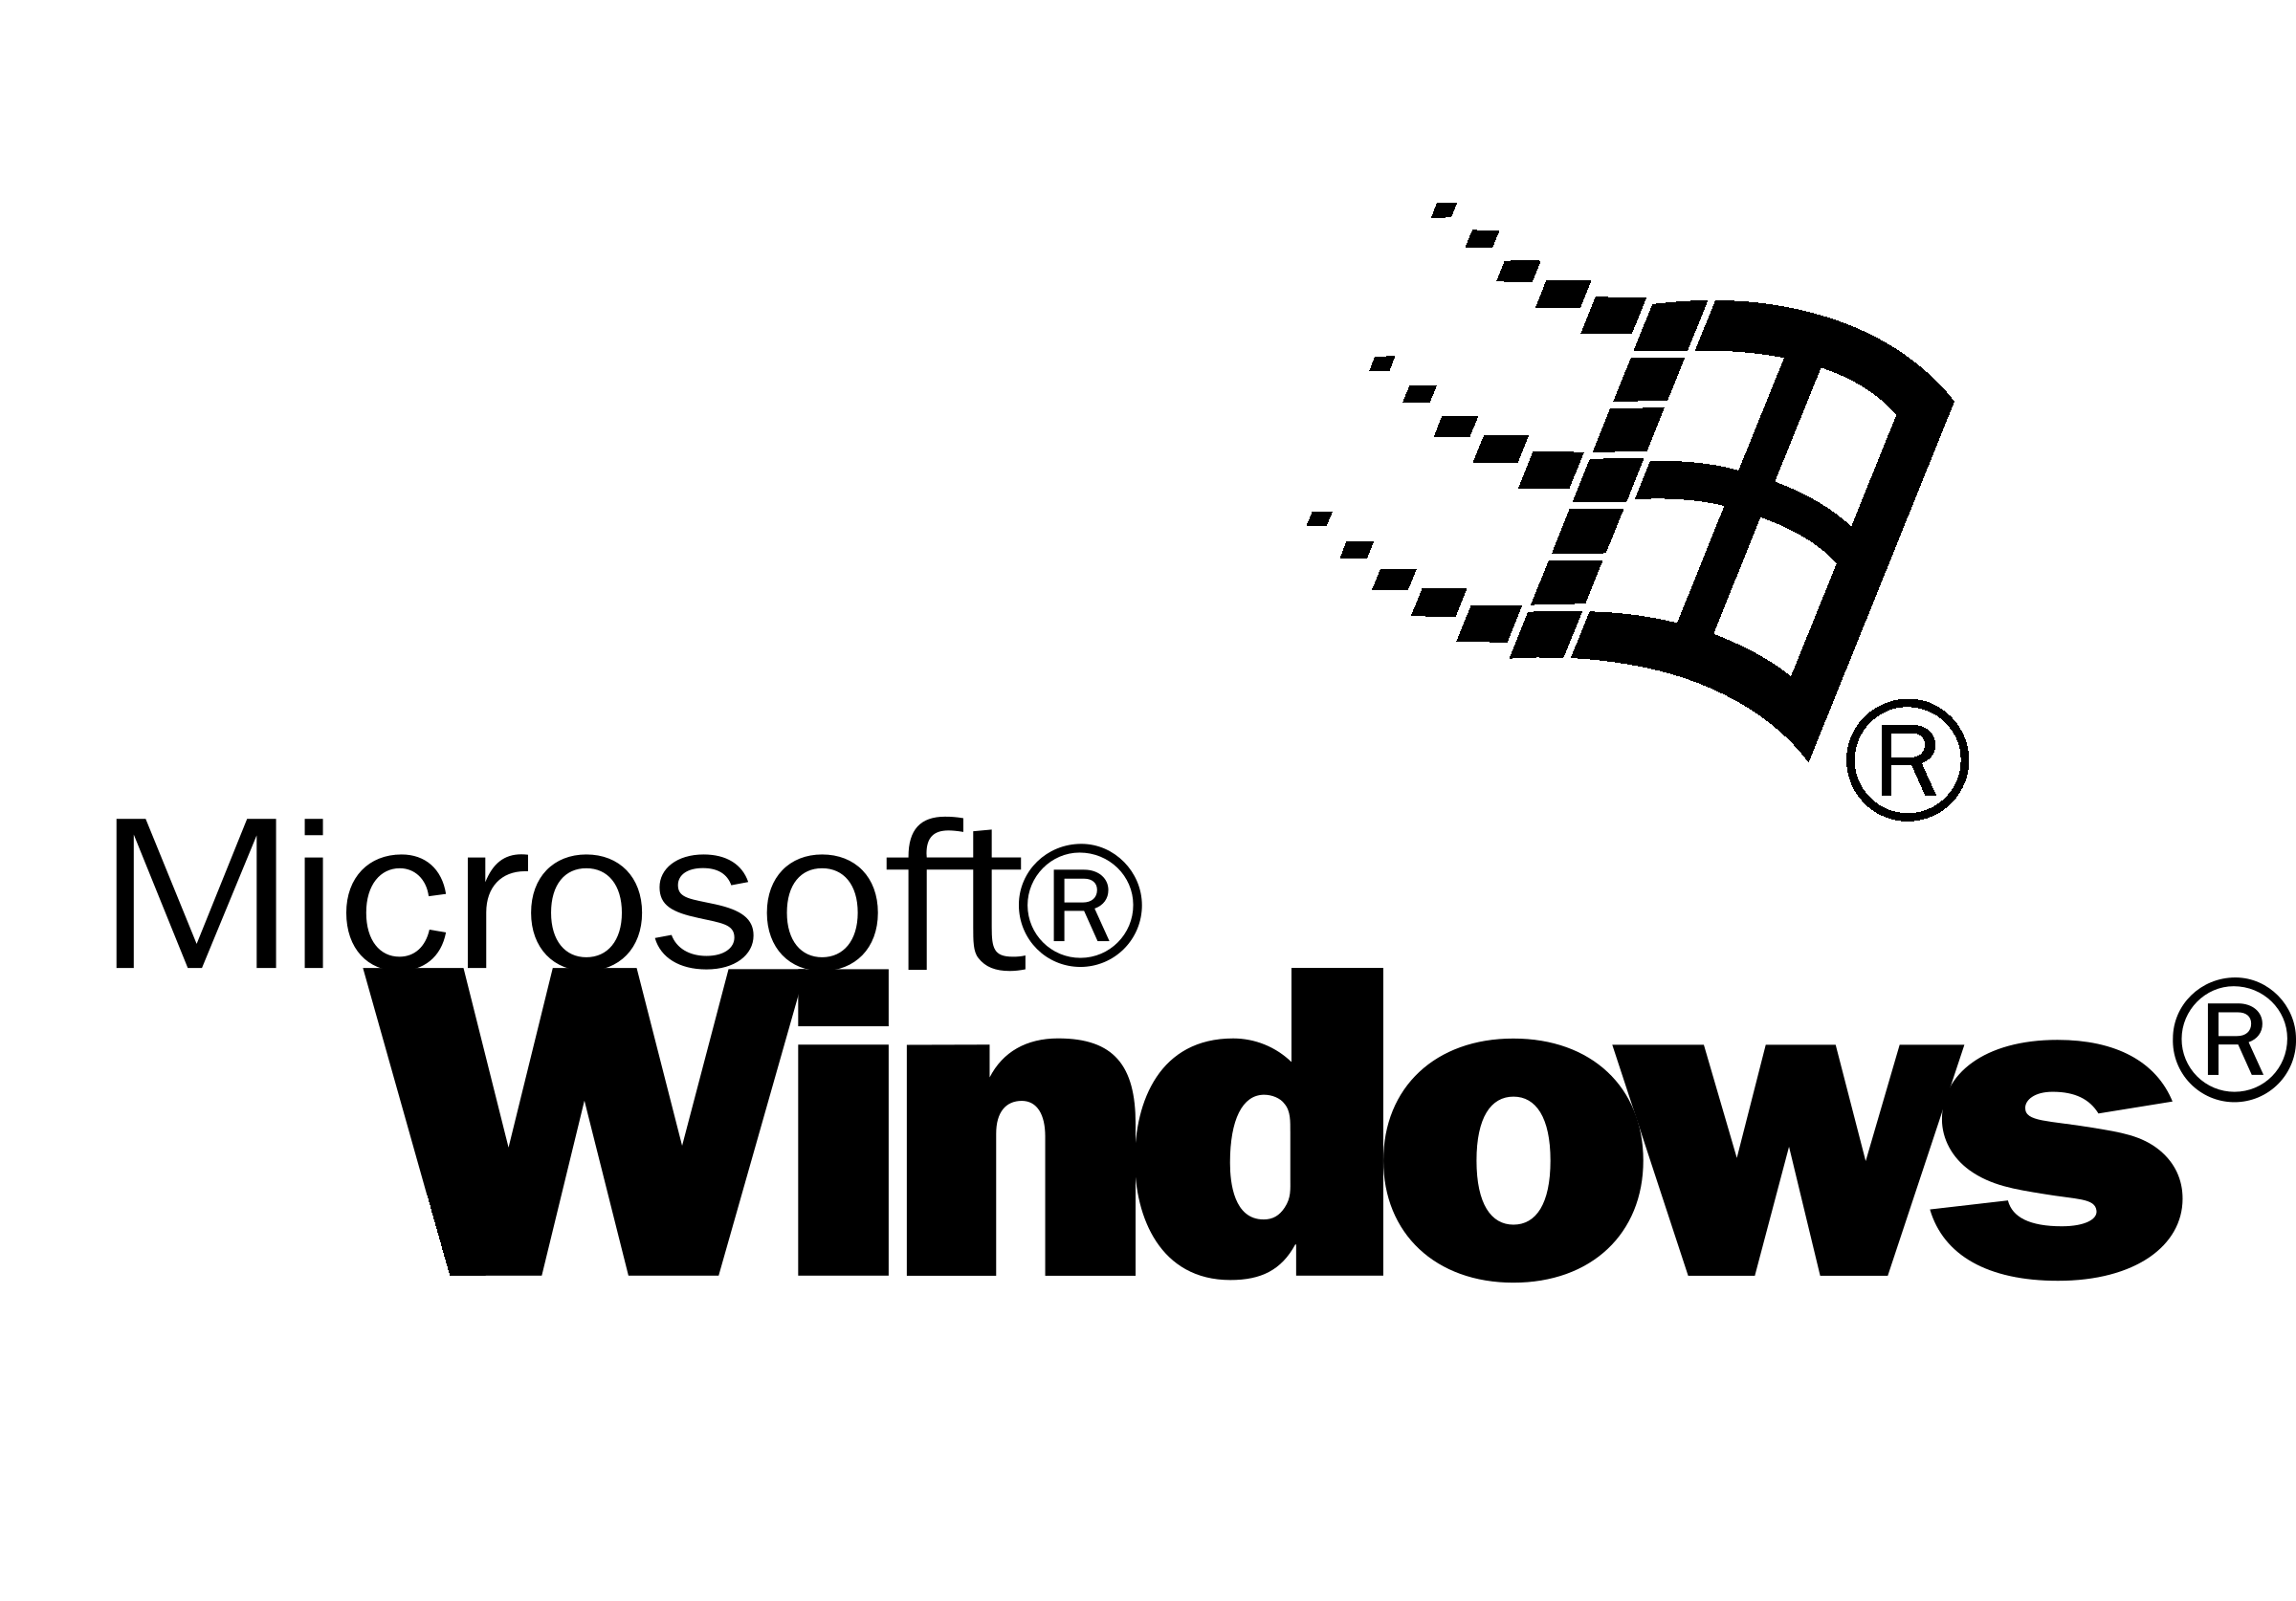 Microsoft Windows 2000 Logo - Microsoft Windows 2000 Logo PNG Transparent & SVG Vector - Freebie ...